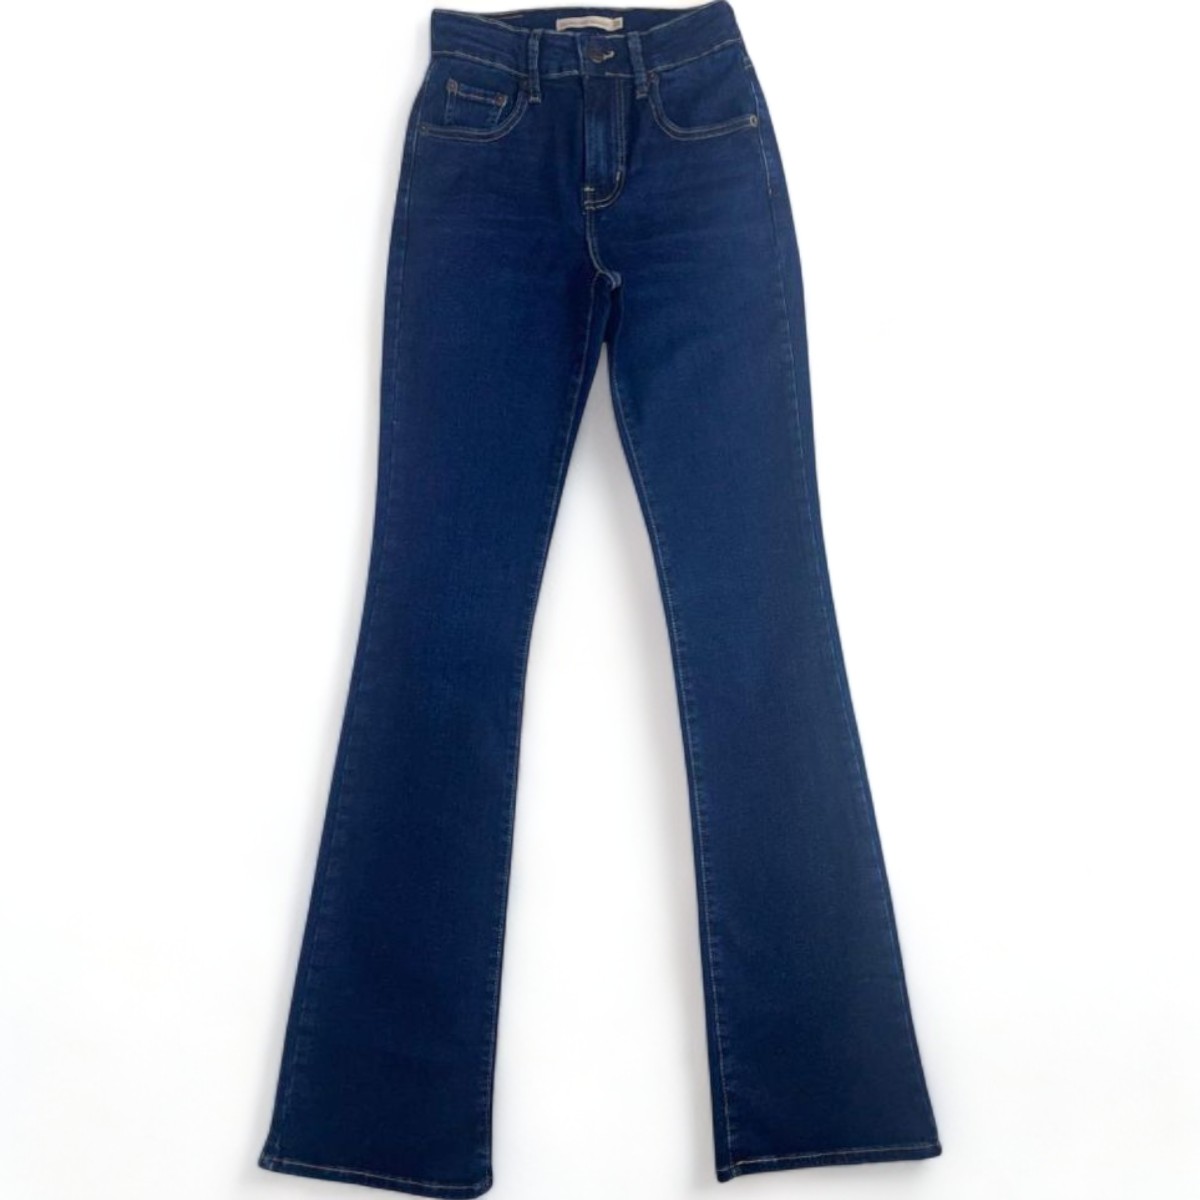 Calça Jeans Feminina Azul 725 Bootcut Original Levi's 33617